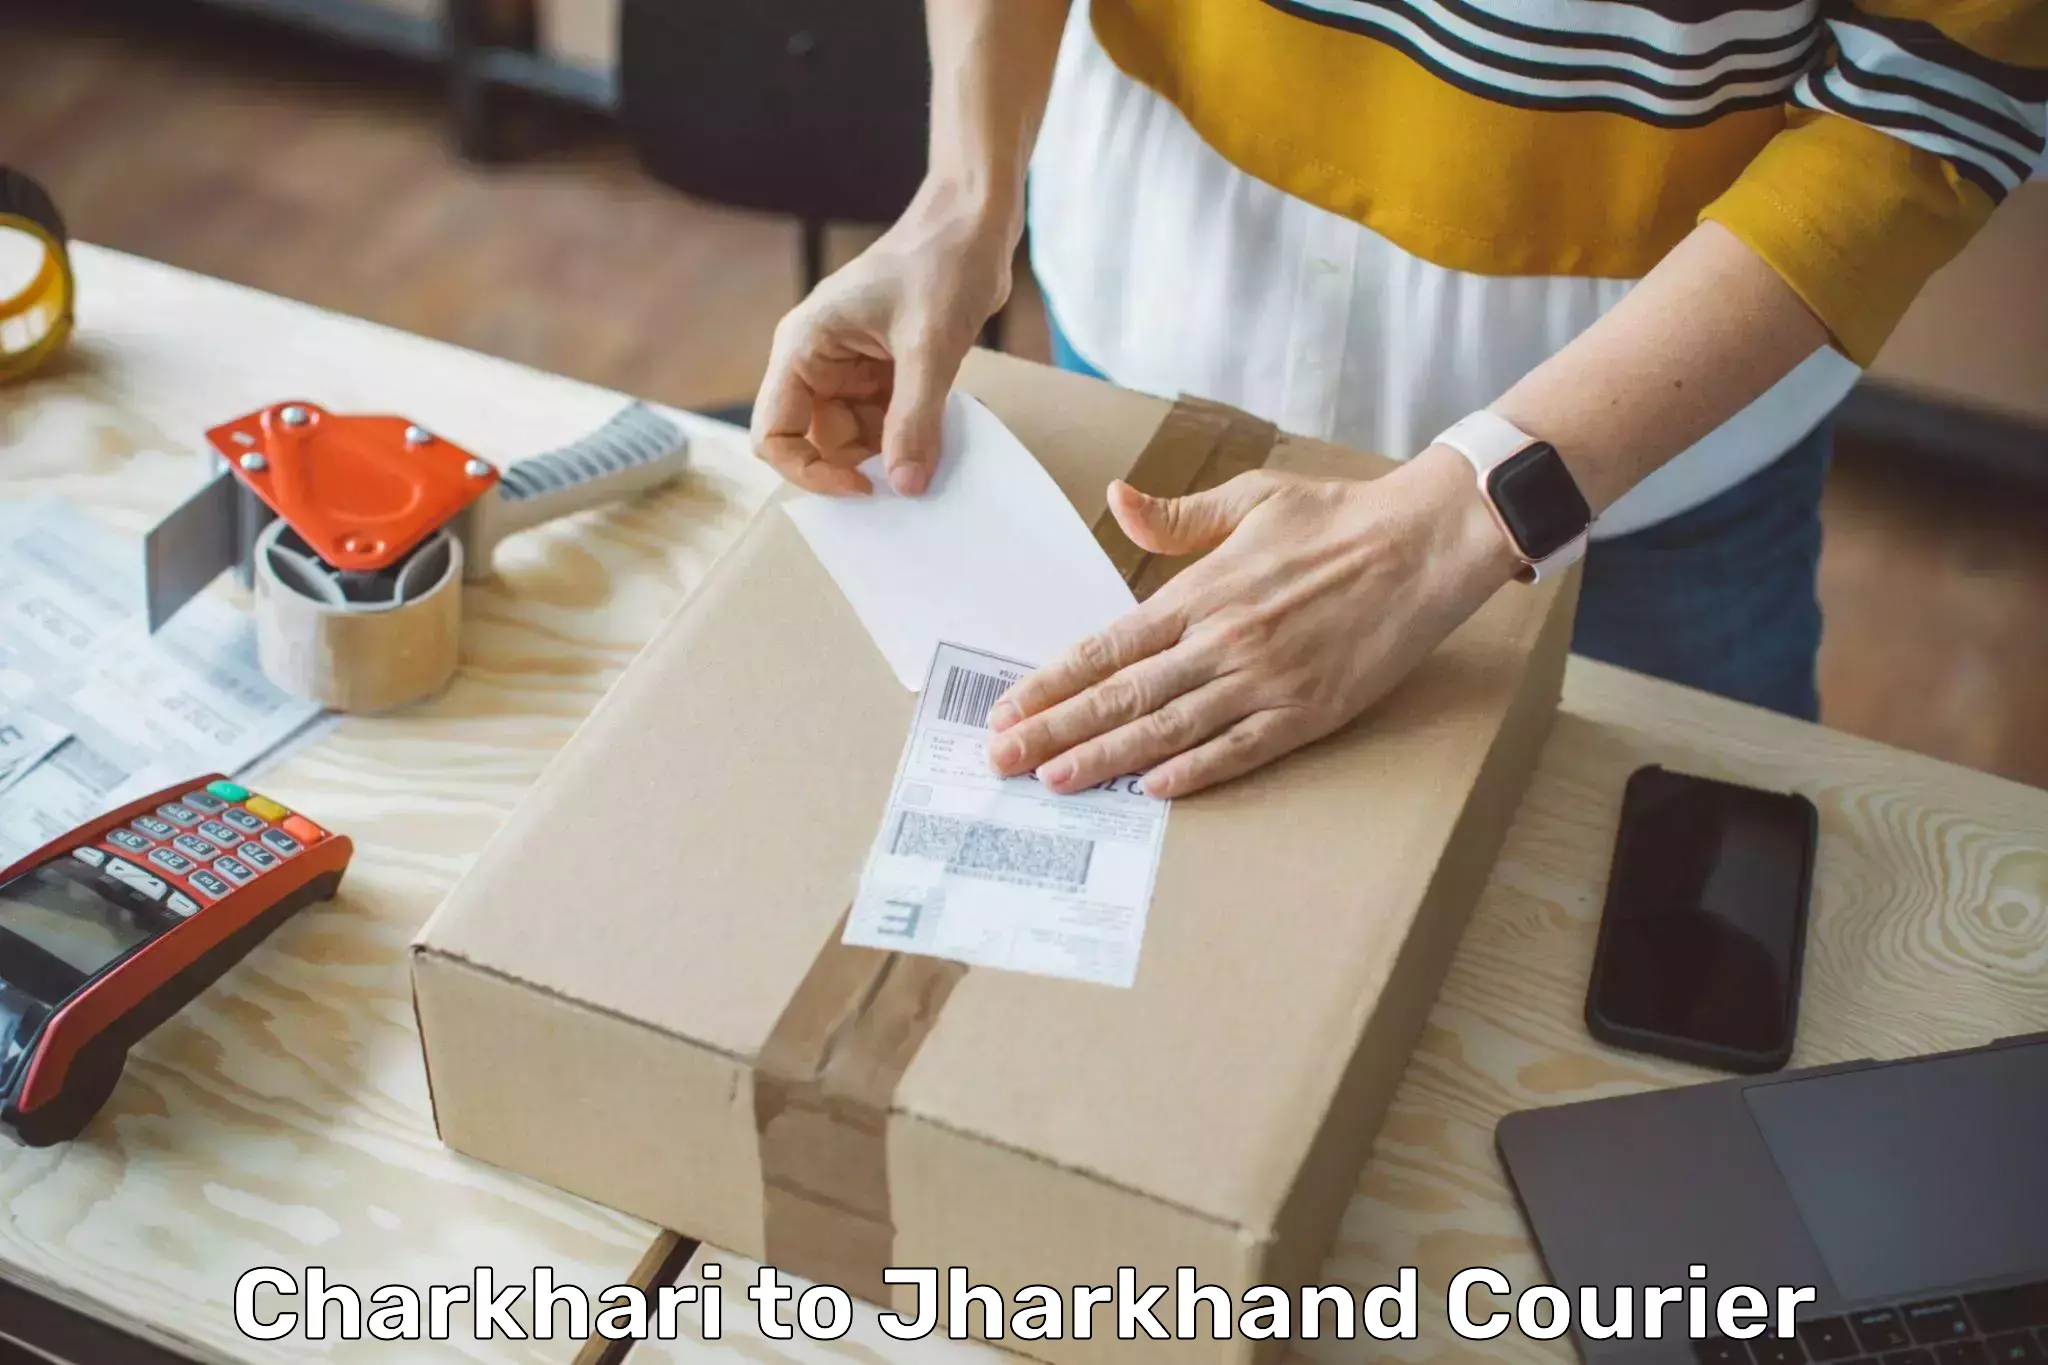 Secure shipping methods Charkhari to Satbarwa